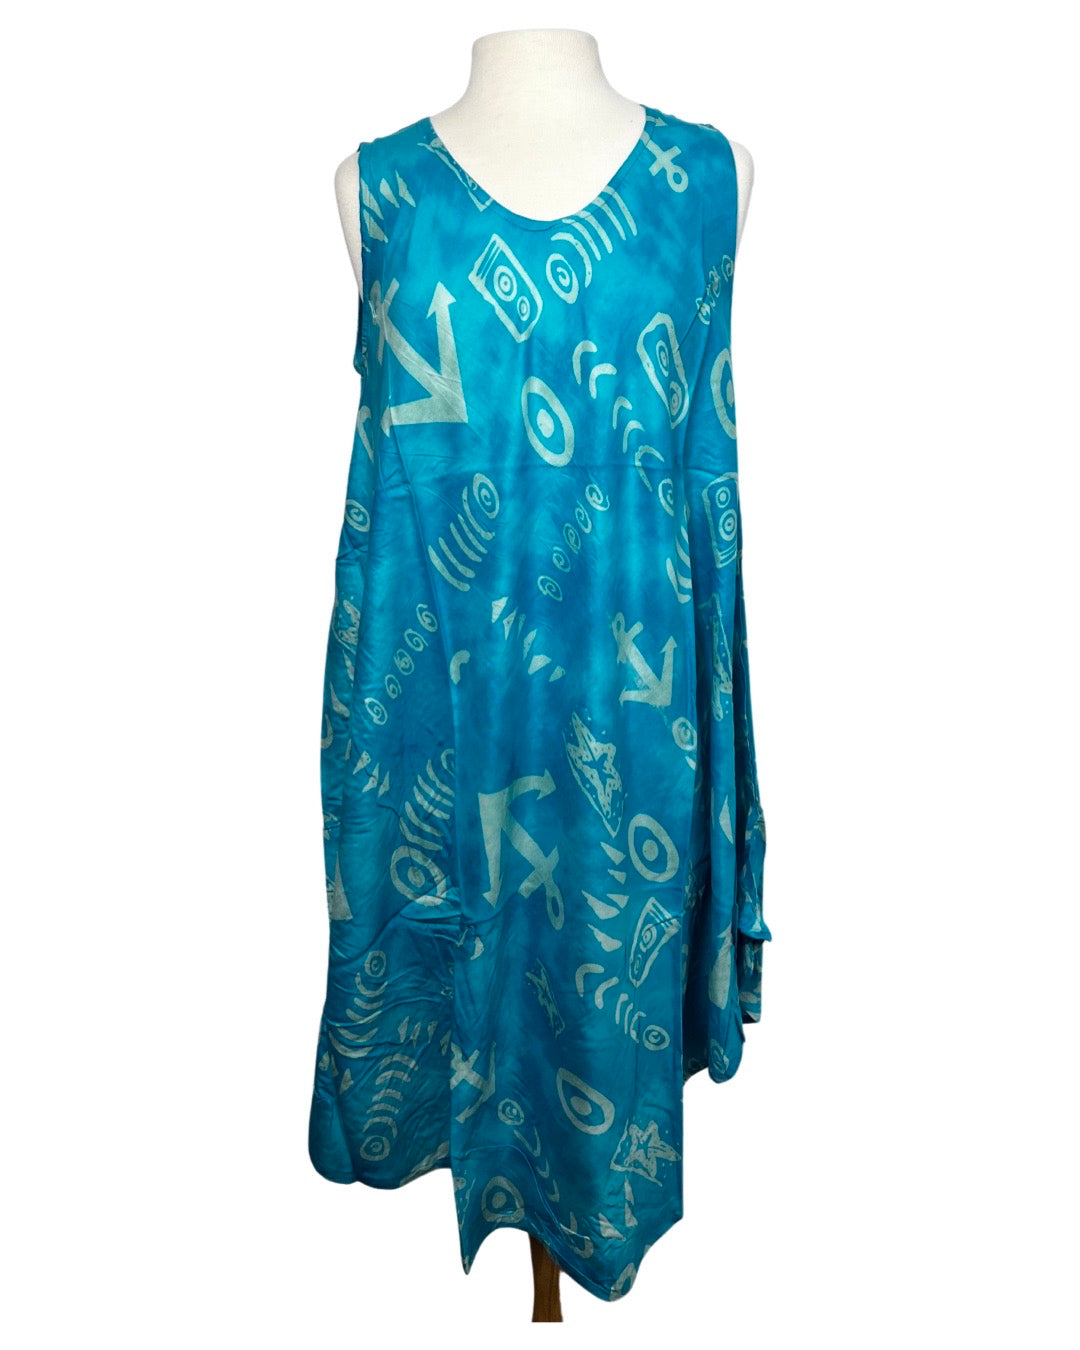 India Blue Turquoise Anchor Dress